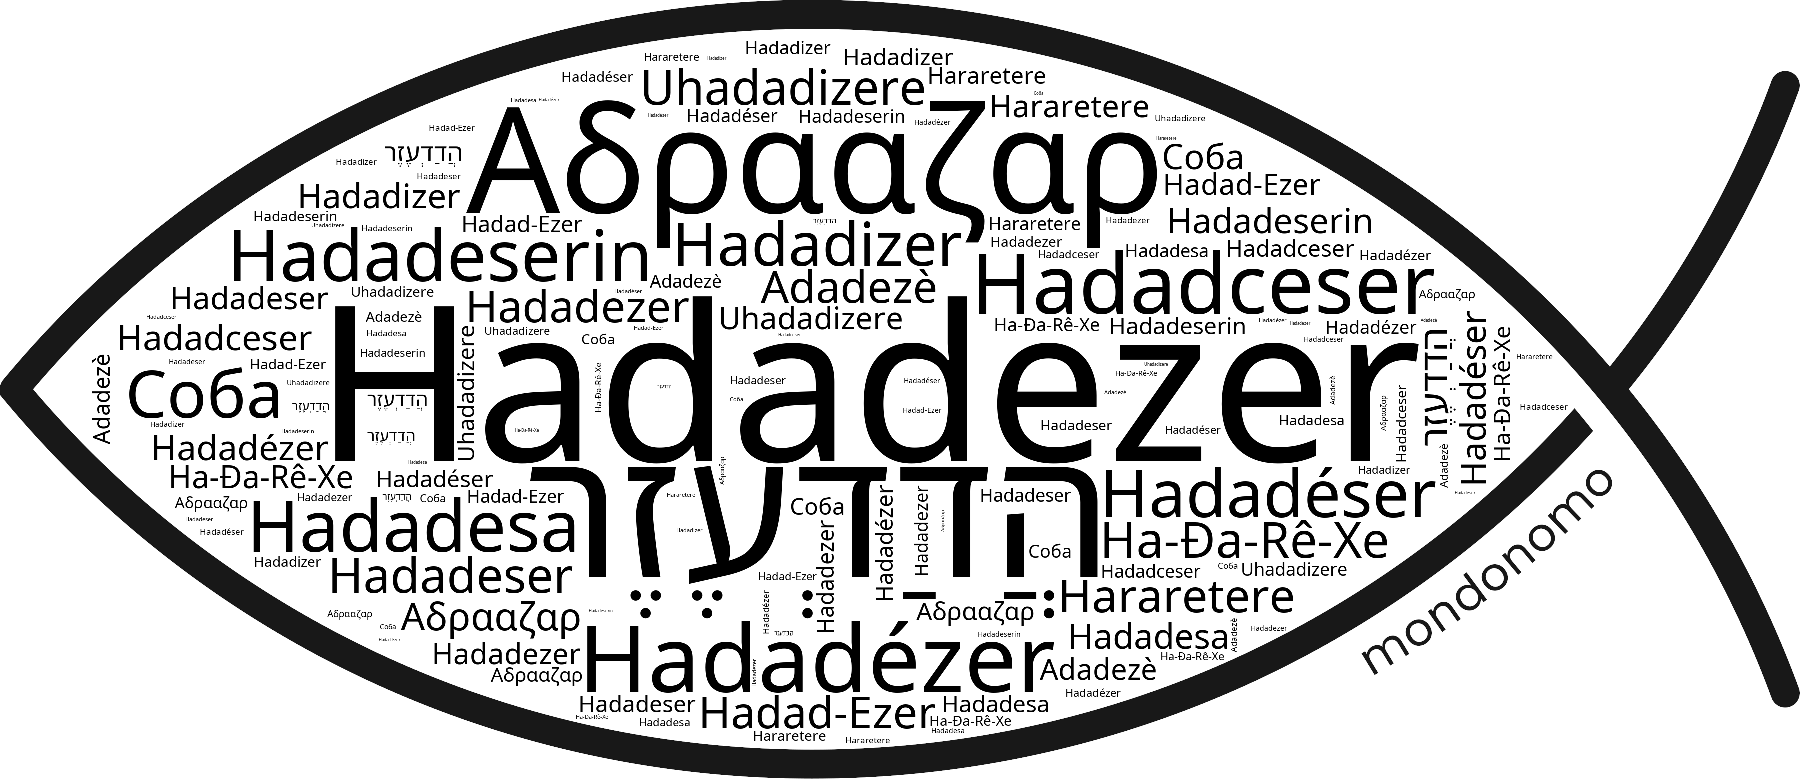 Name Hadadezer in the world's Bibles